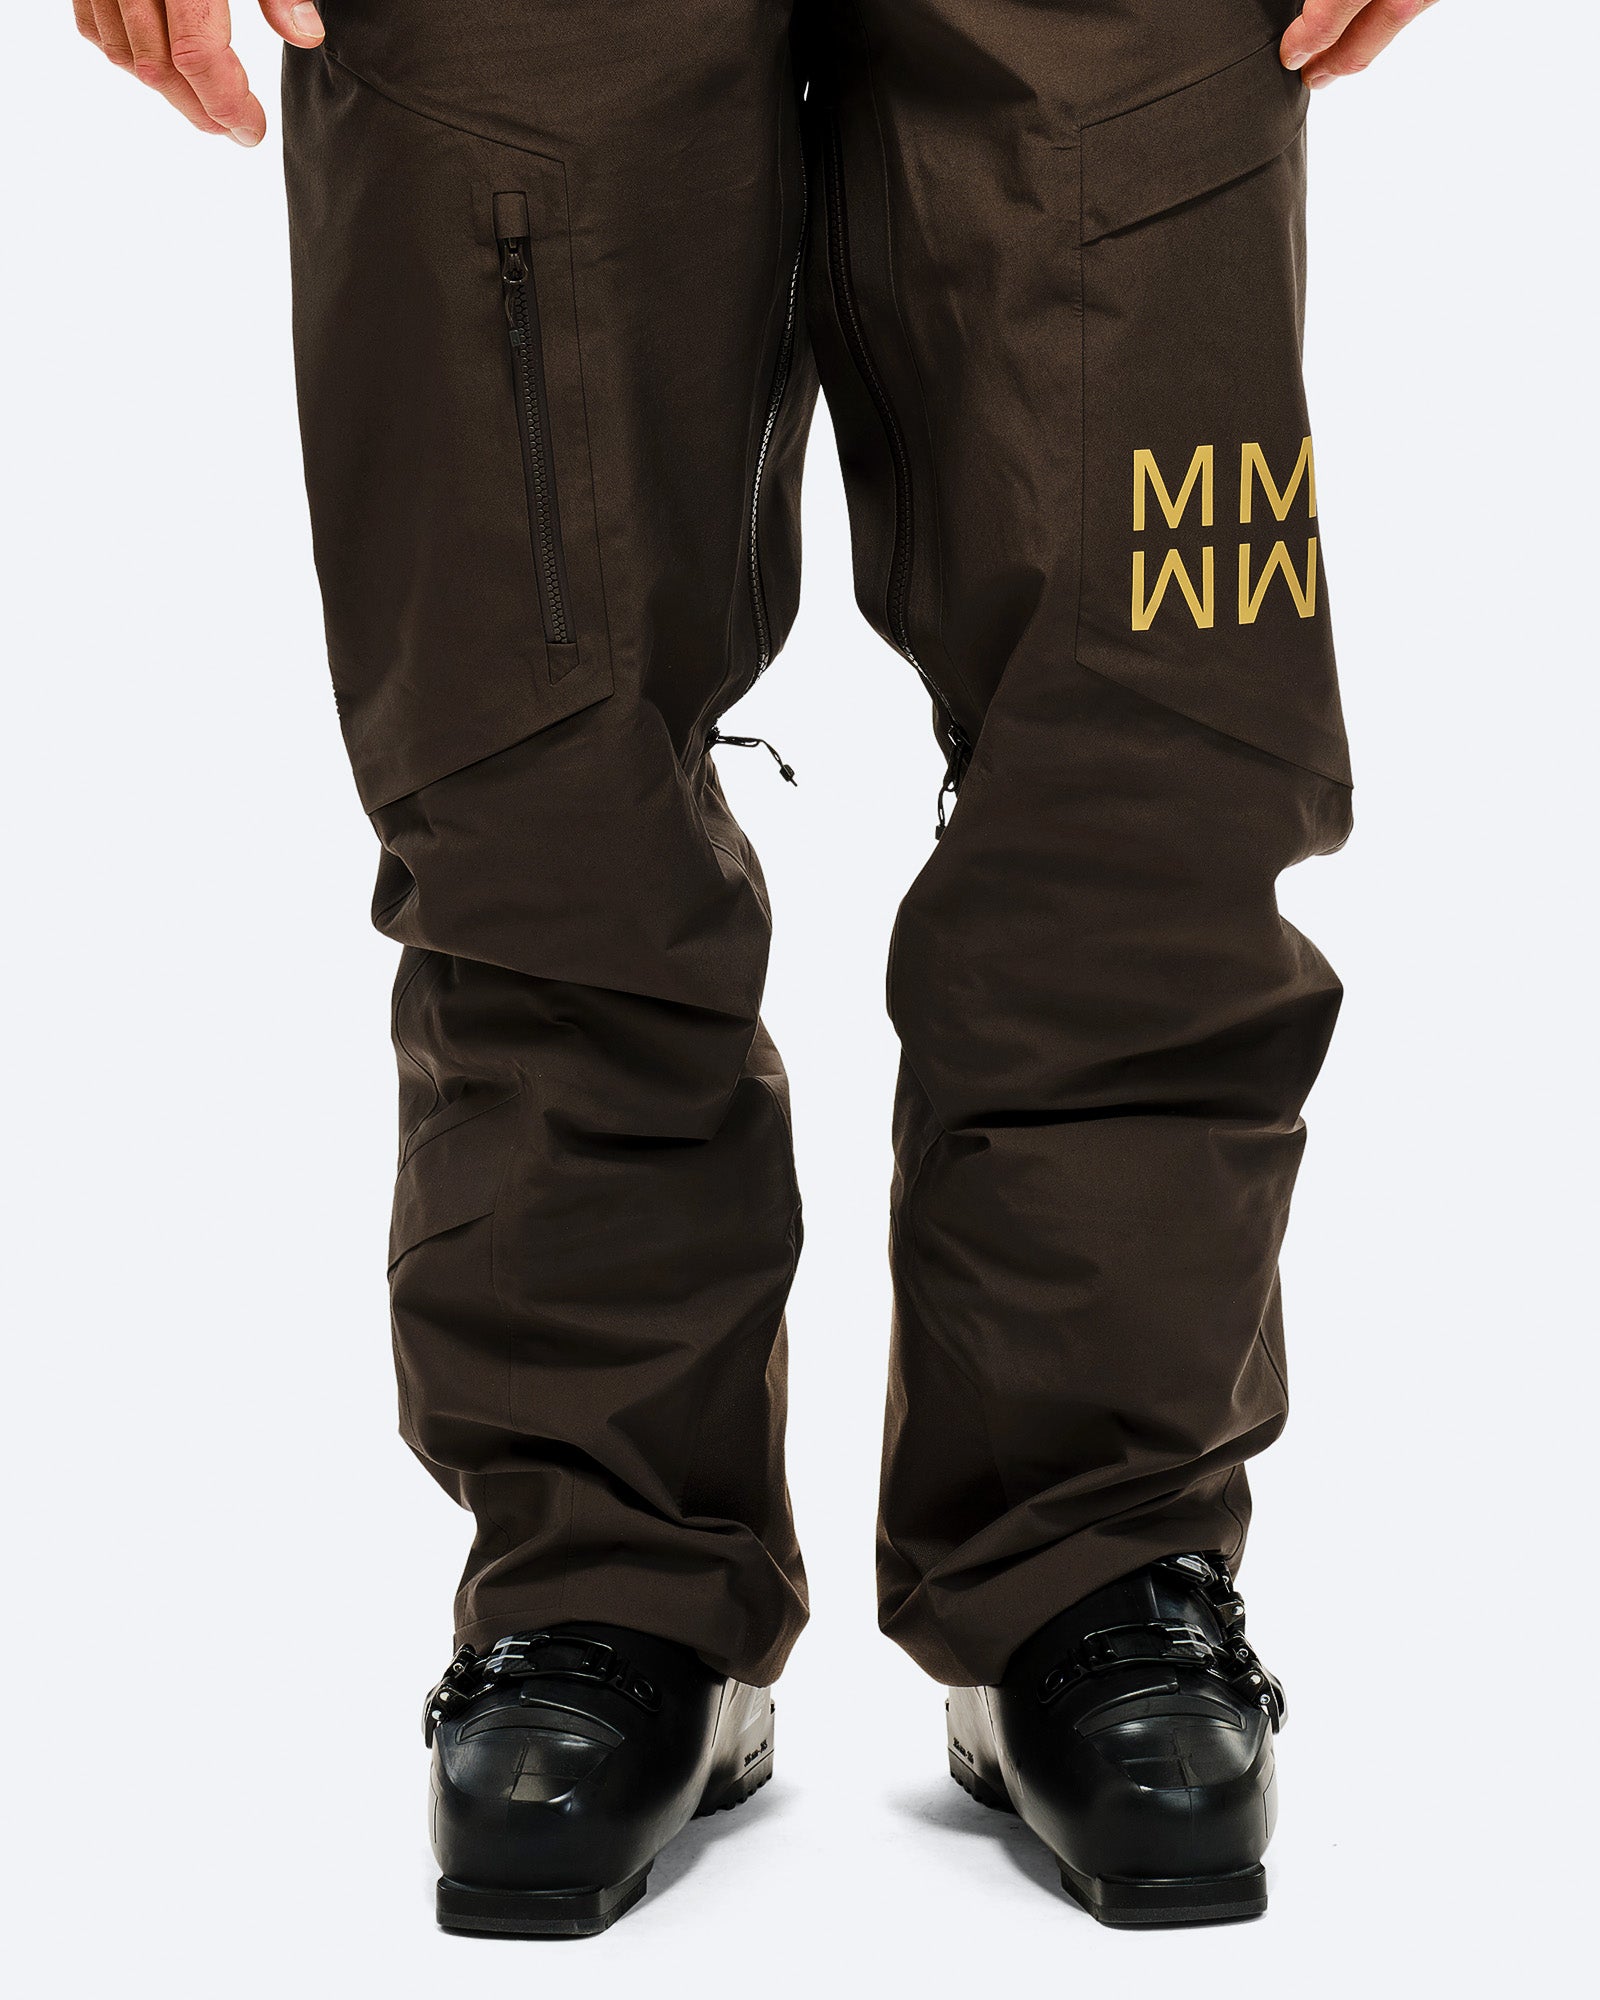 Aqua guard technology for waterproof zippers.Leg pockets.
Marcel Mountain Work Wear signature print. card image